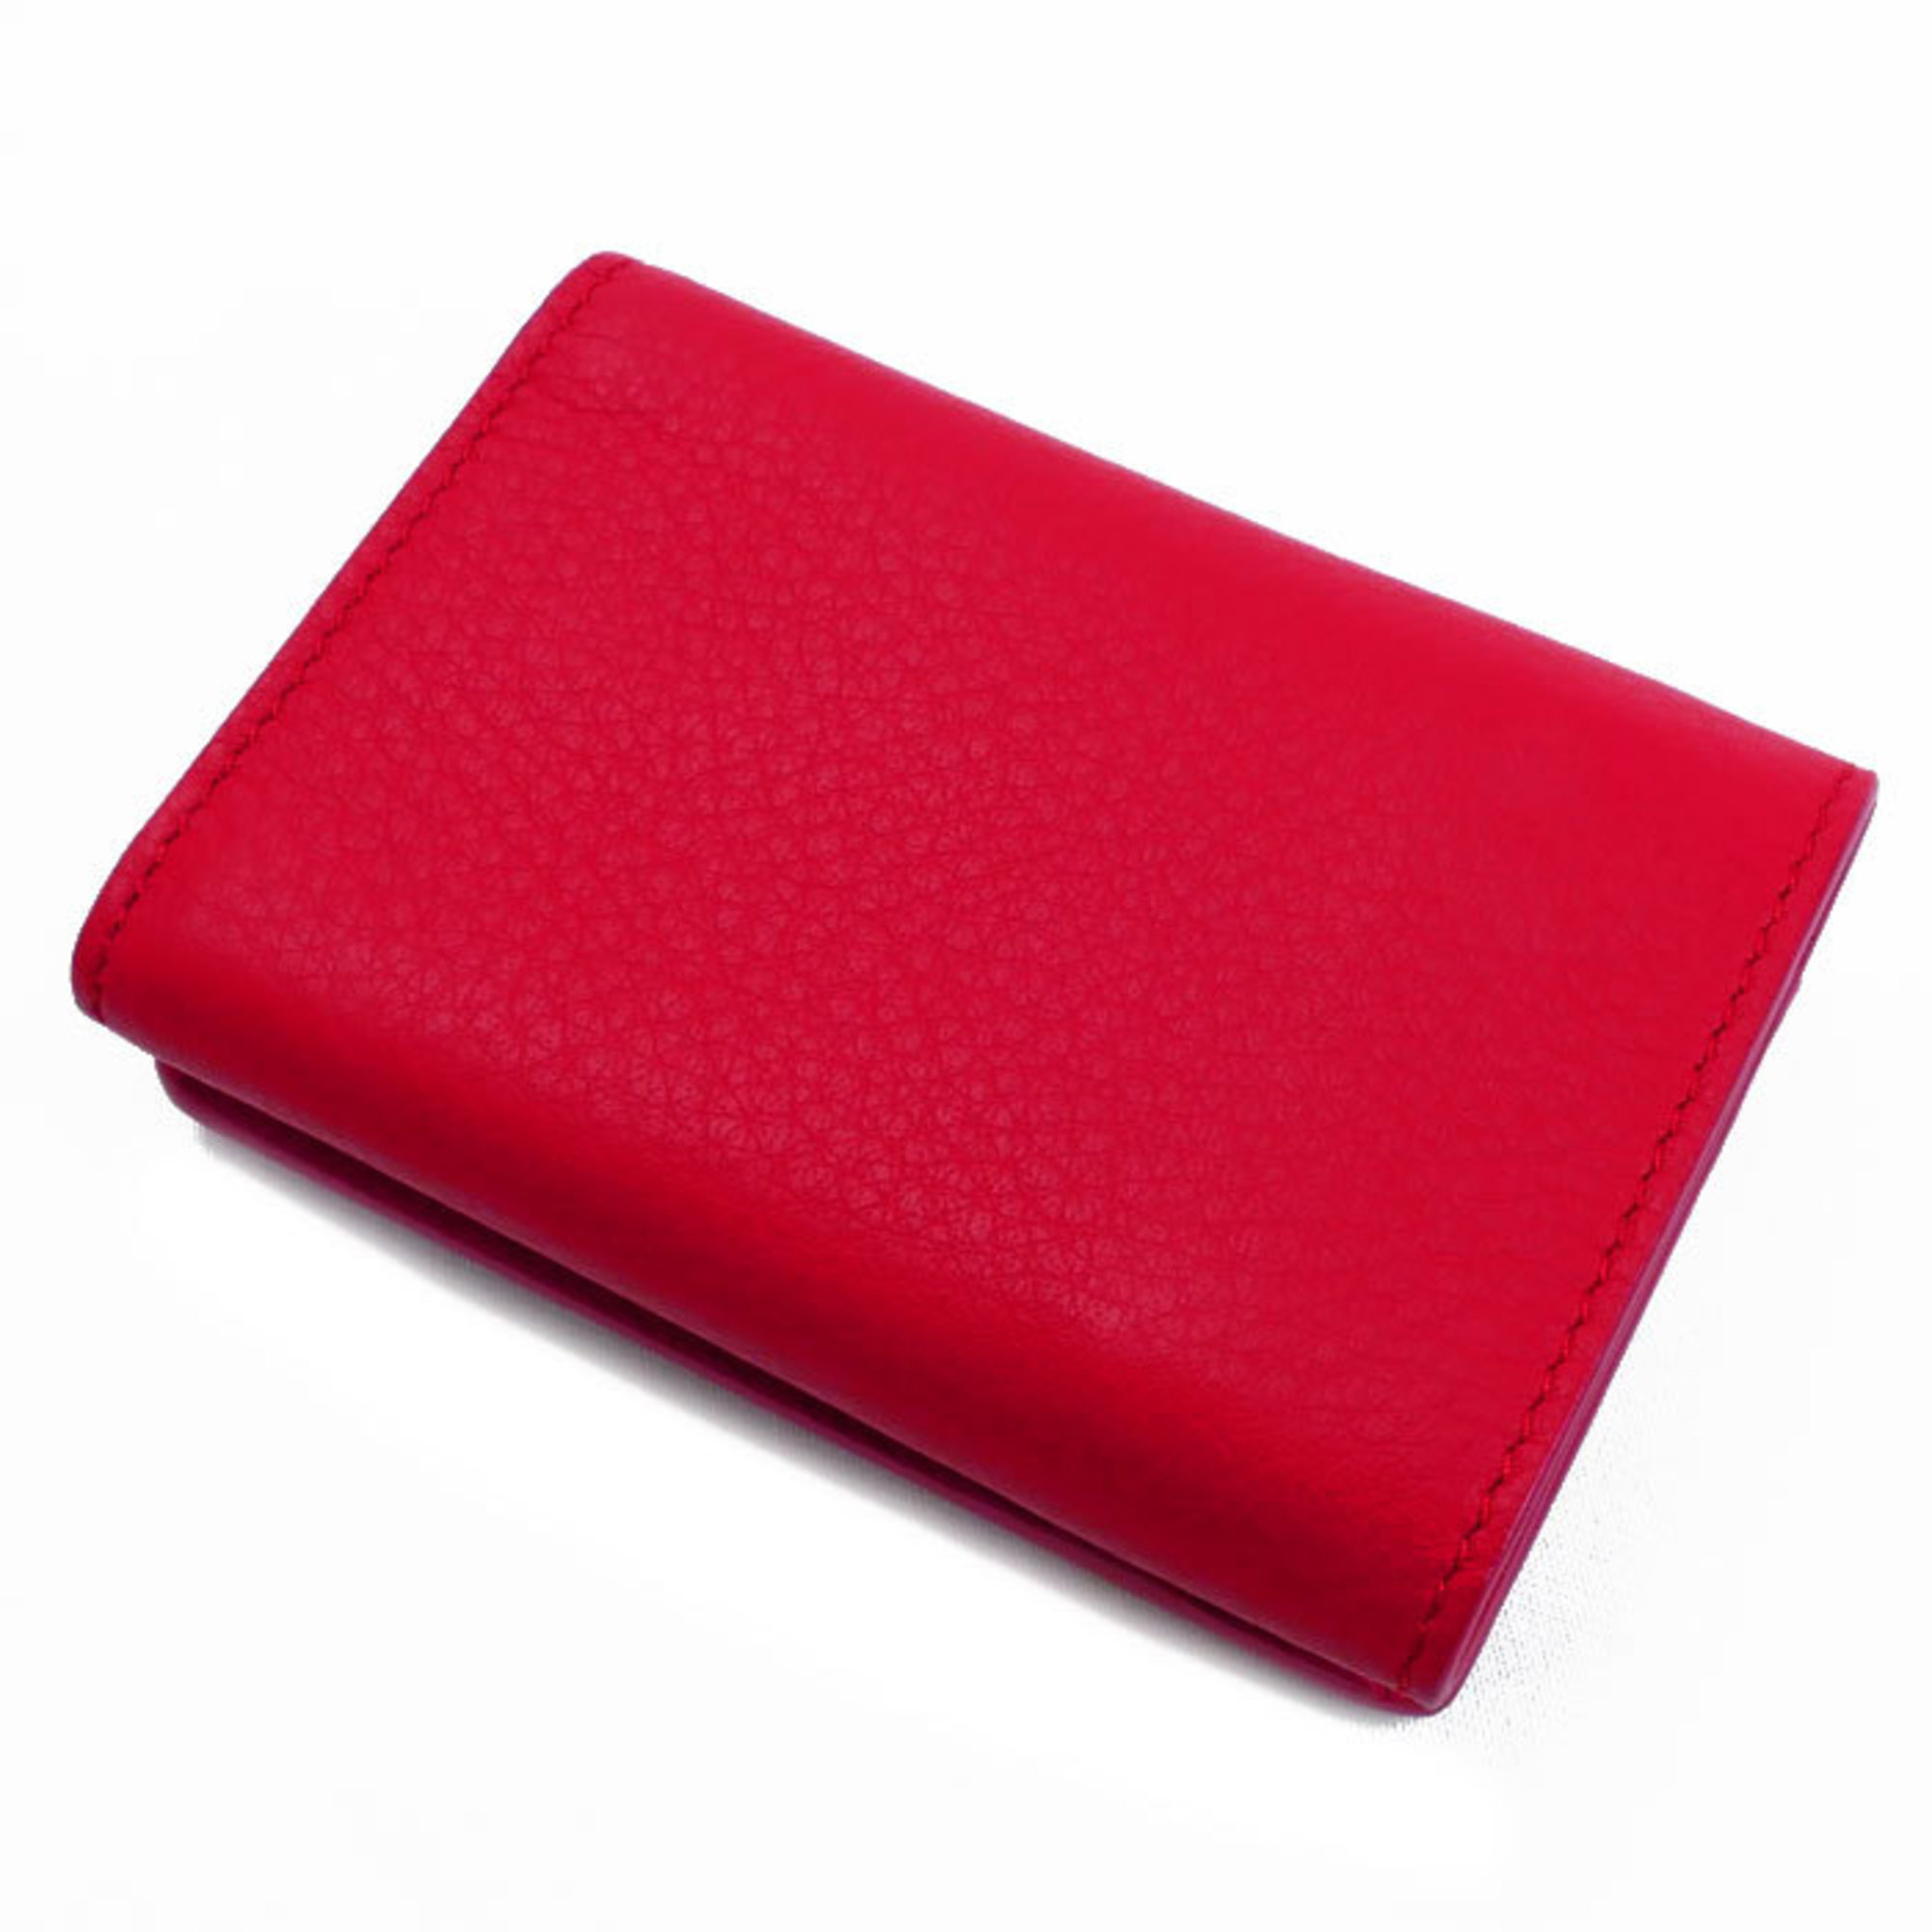 BALENCIAGA Paper Tri-fold Wallet Red 391446 DLQ0N 6254 Women's